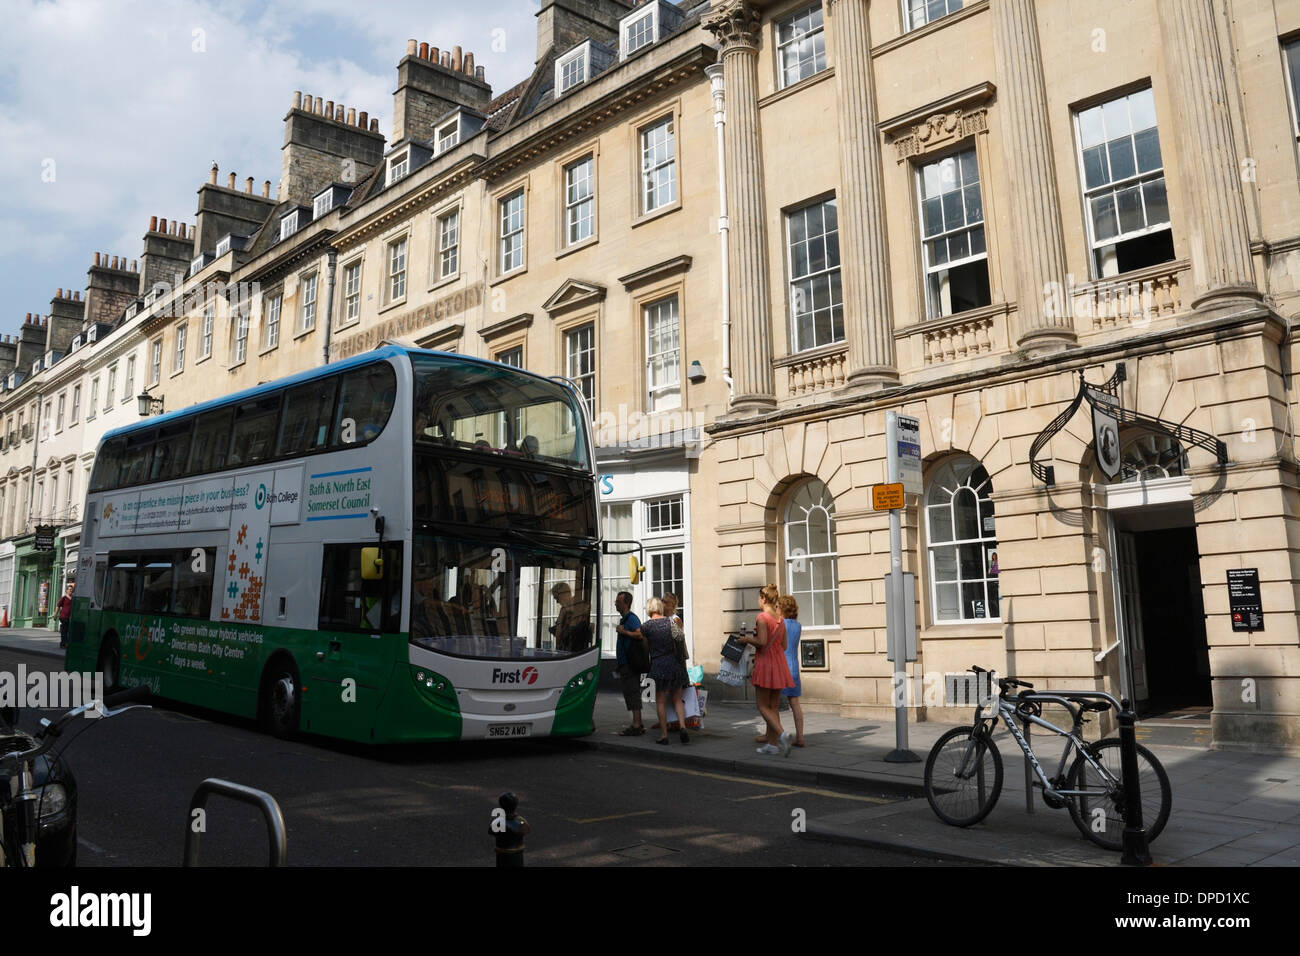 People boarding a bus in Bath City Centre England. Urban public transport Stock Photo